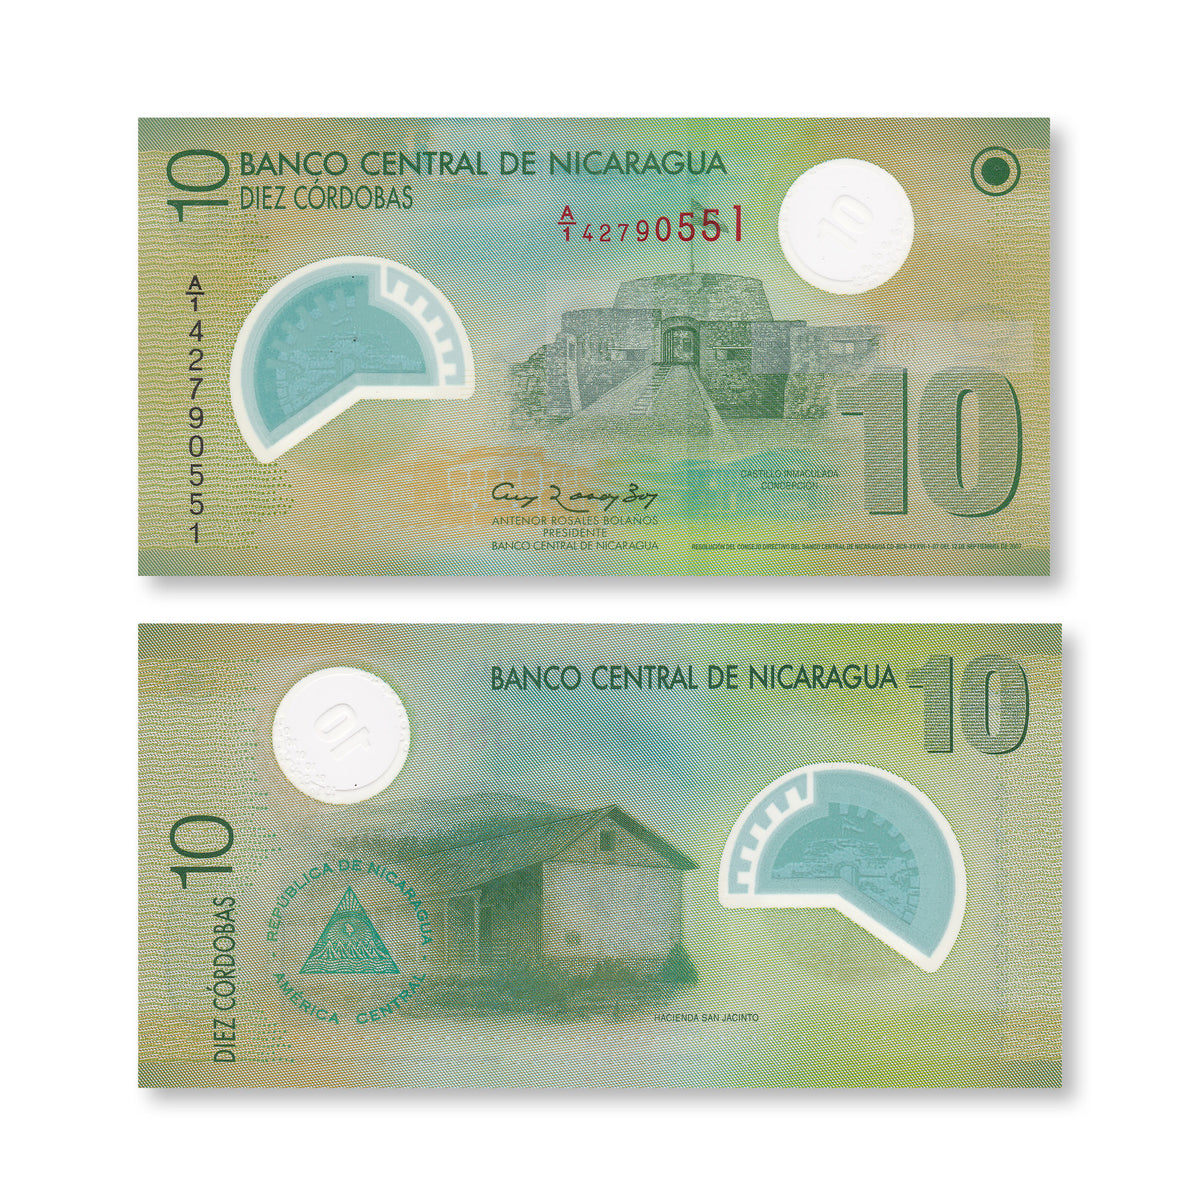 Nicaragua 10 Córdobas, 2007, B497b, P201b, UNC - Robert's World Money - World Banknotes